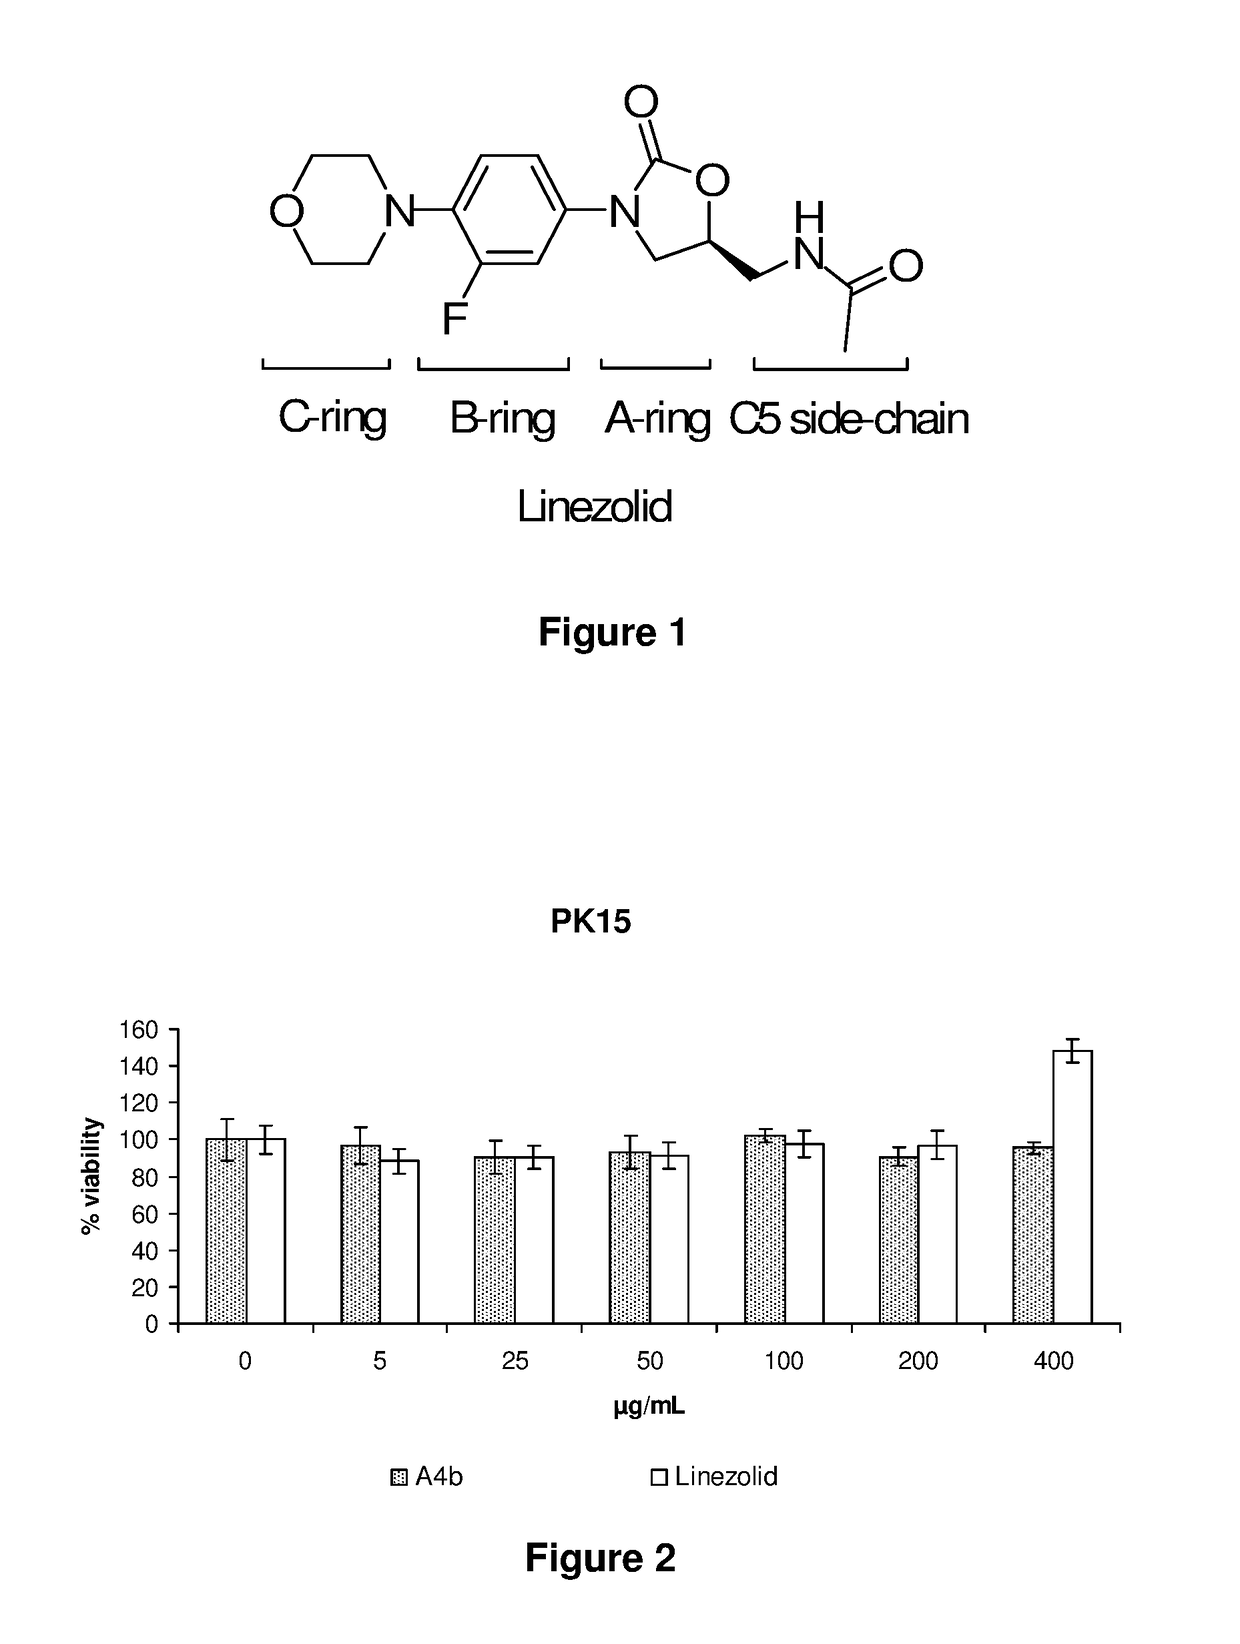 1,2,4-Oxadiazol compounds active against gram-positive pathogens